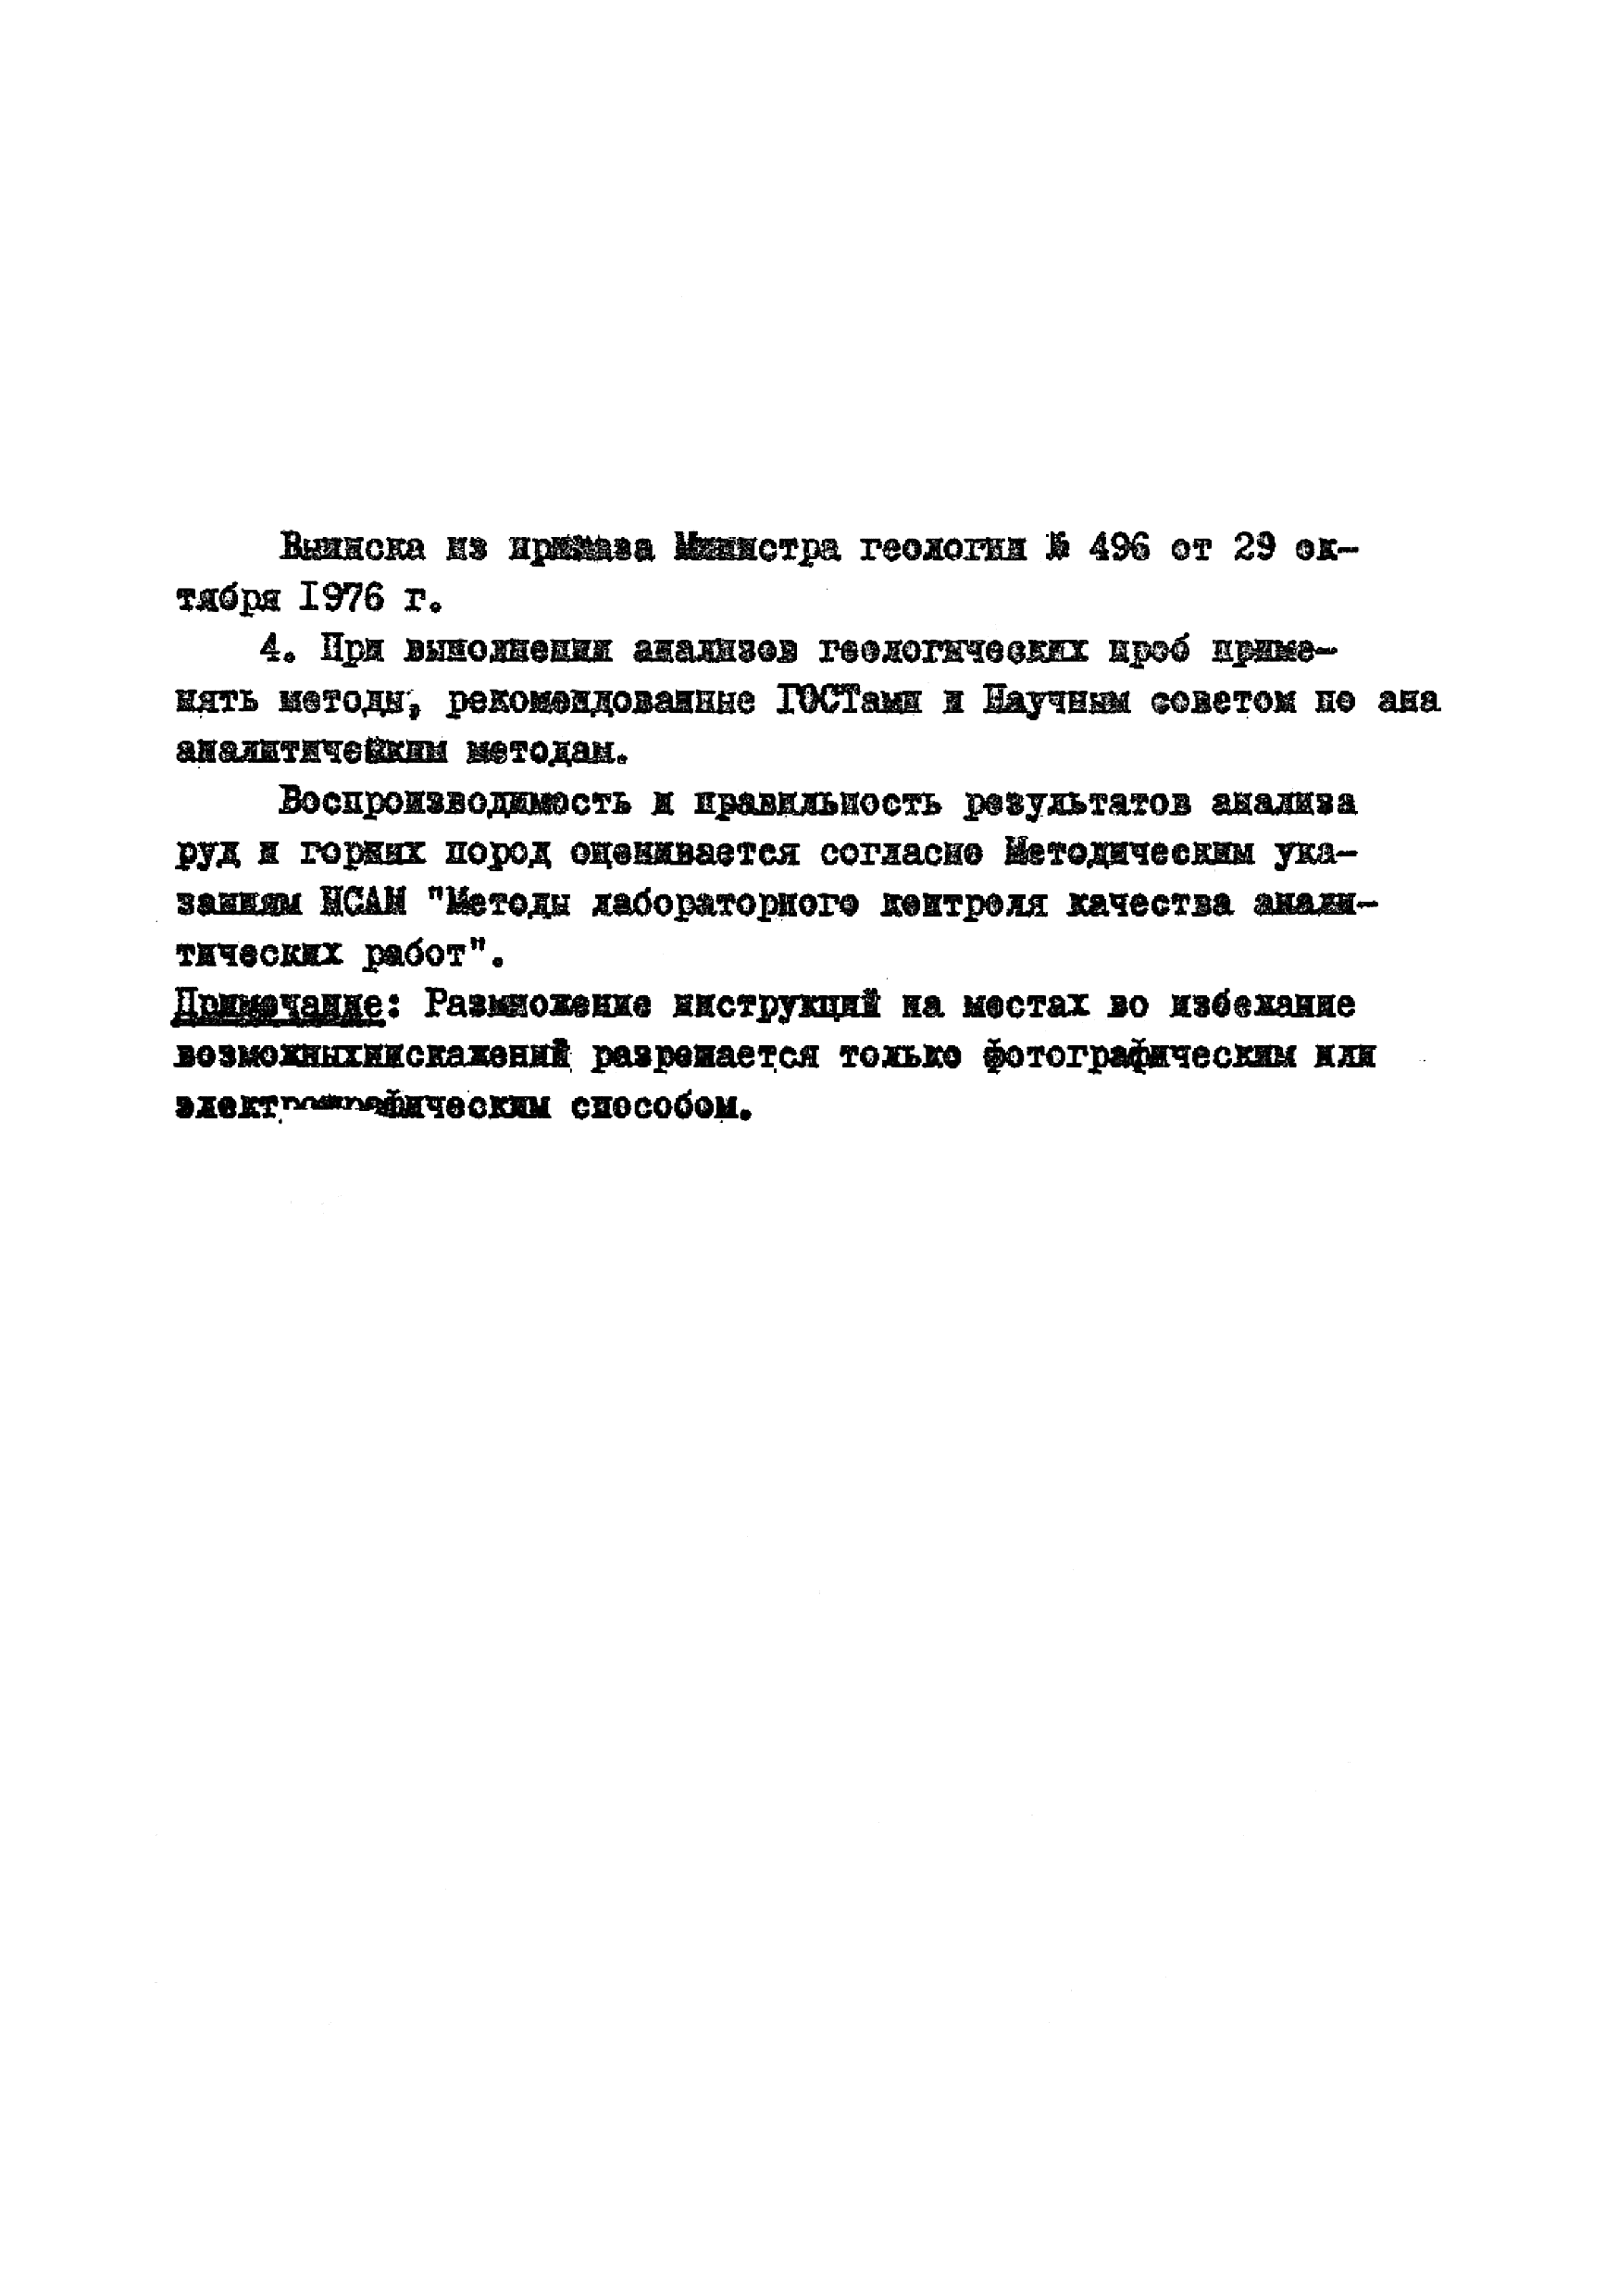 Инструкция НСАМ 193-Х